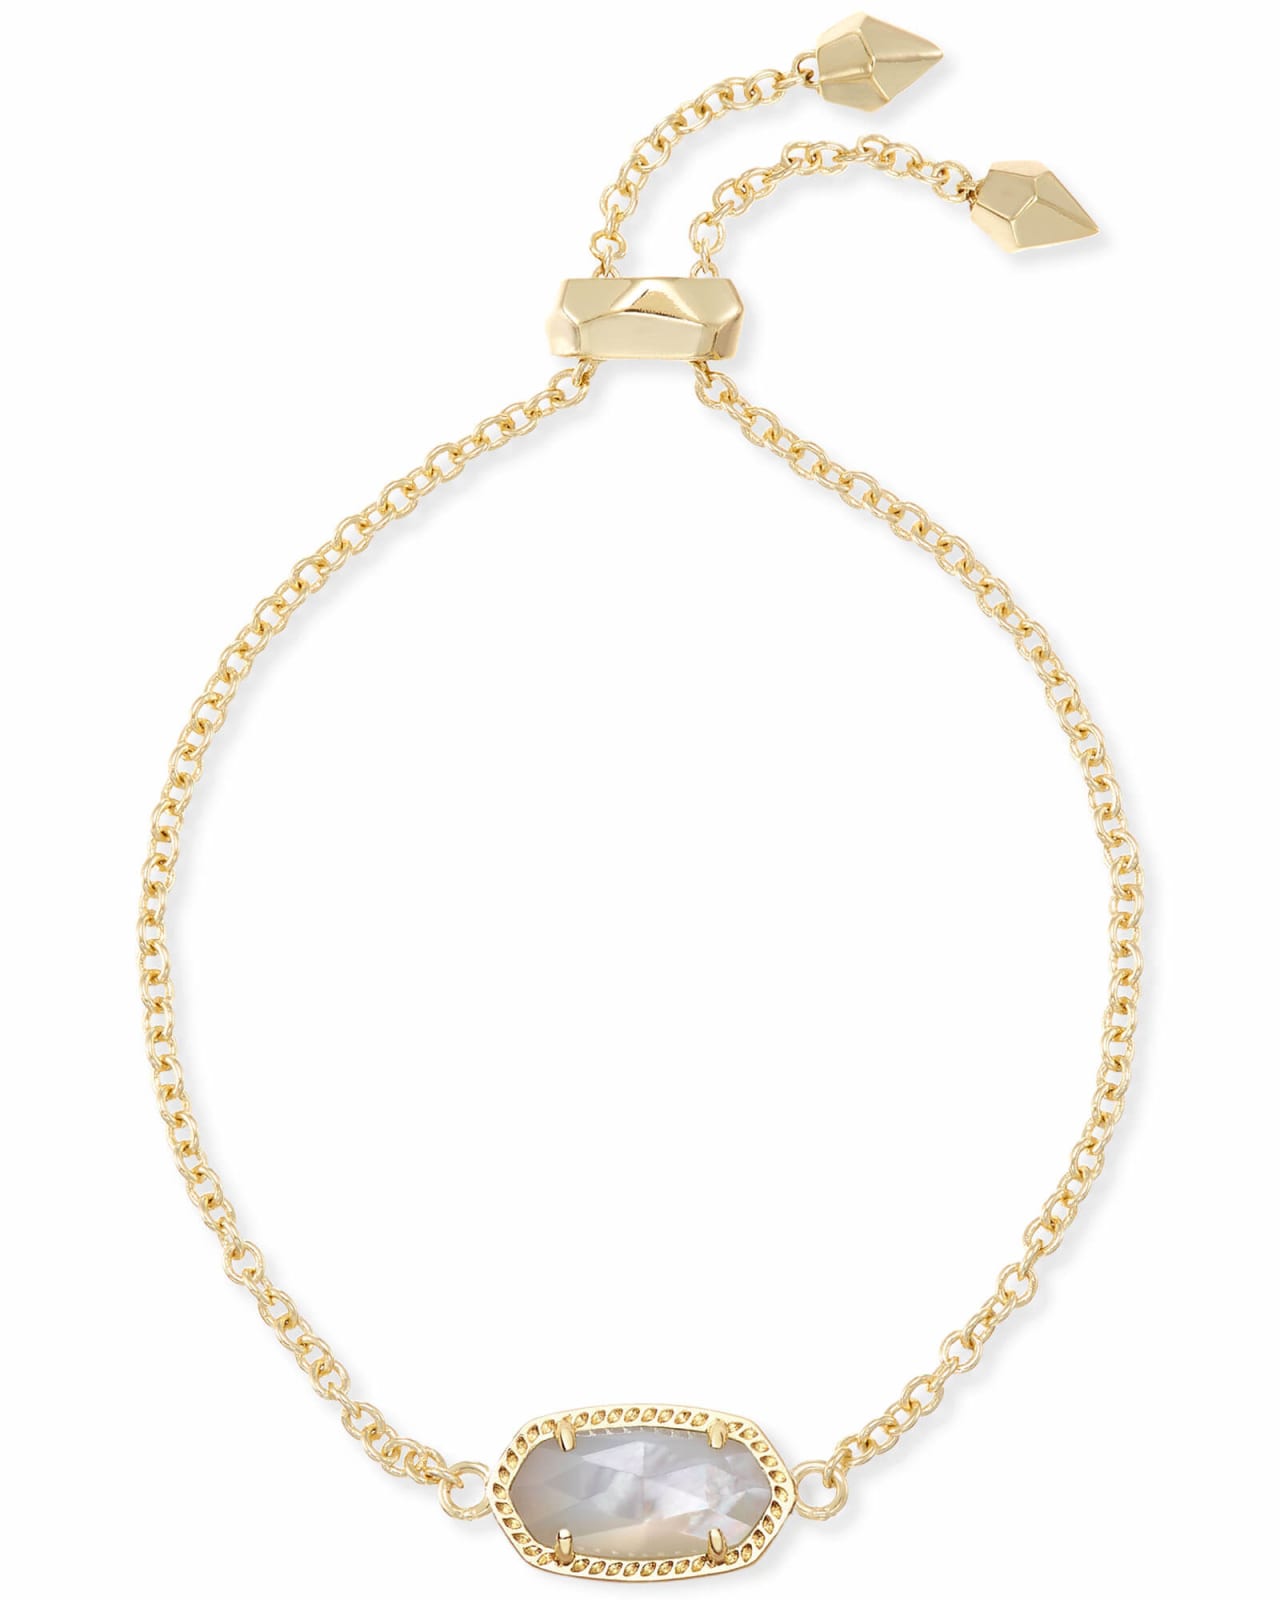 Elaina Gold Adjustable Bracelet in Garnet | Kendra Scott | Kendra Scott